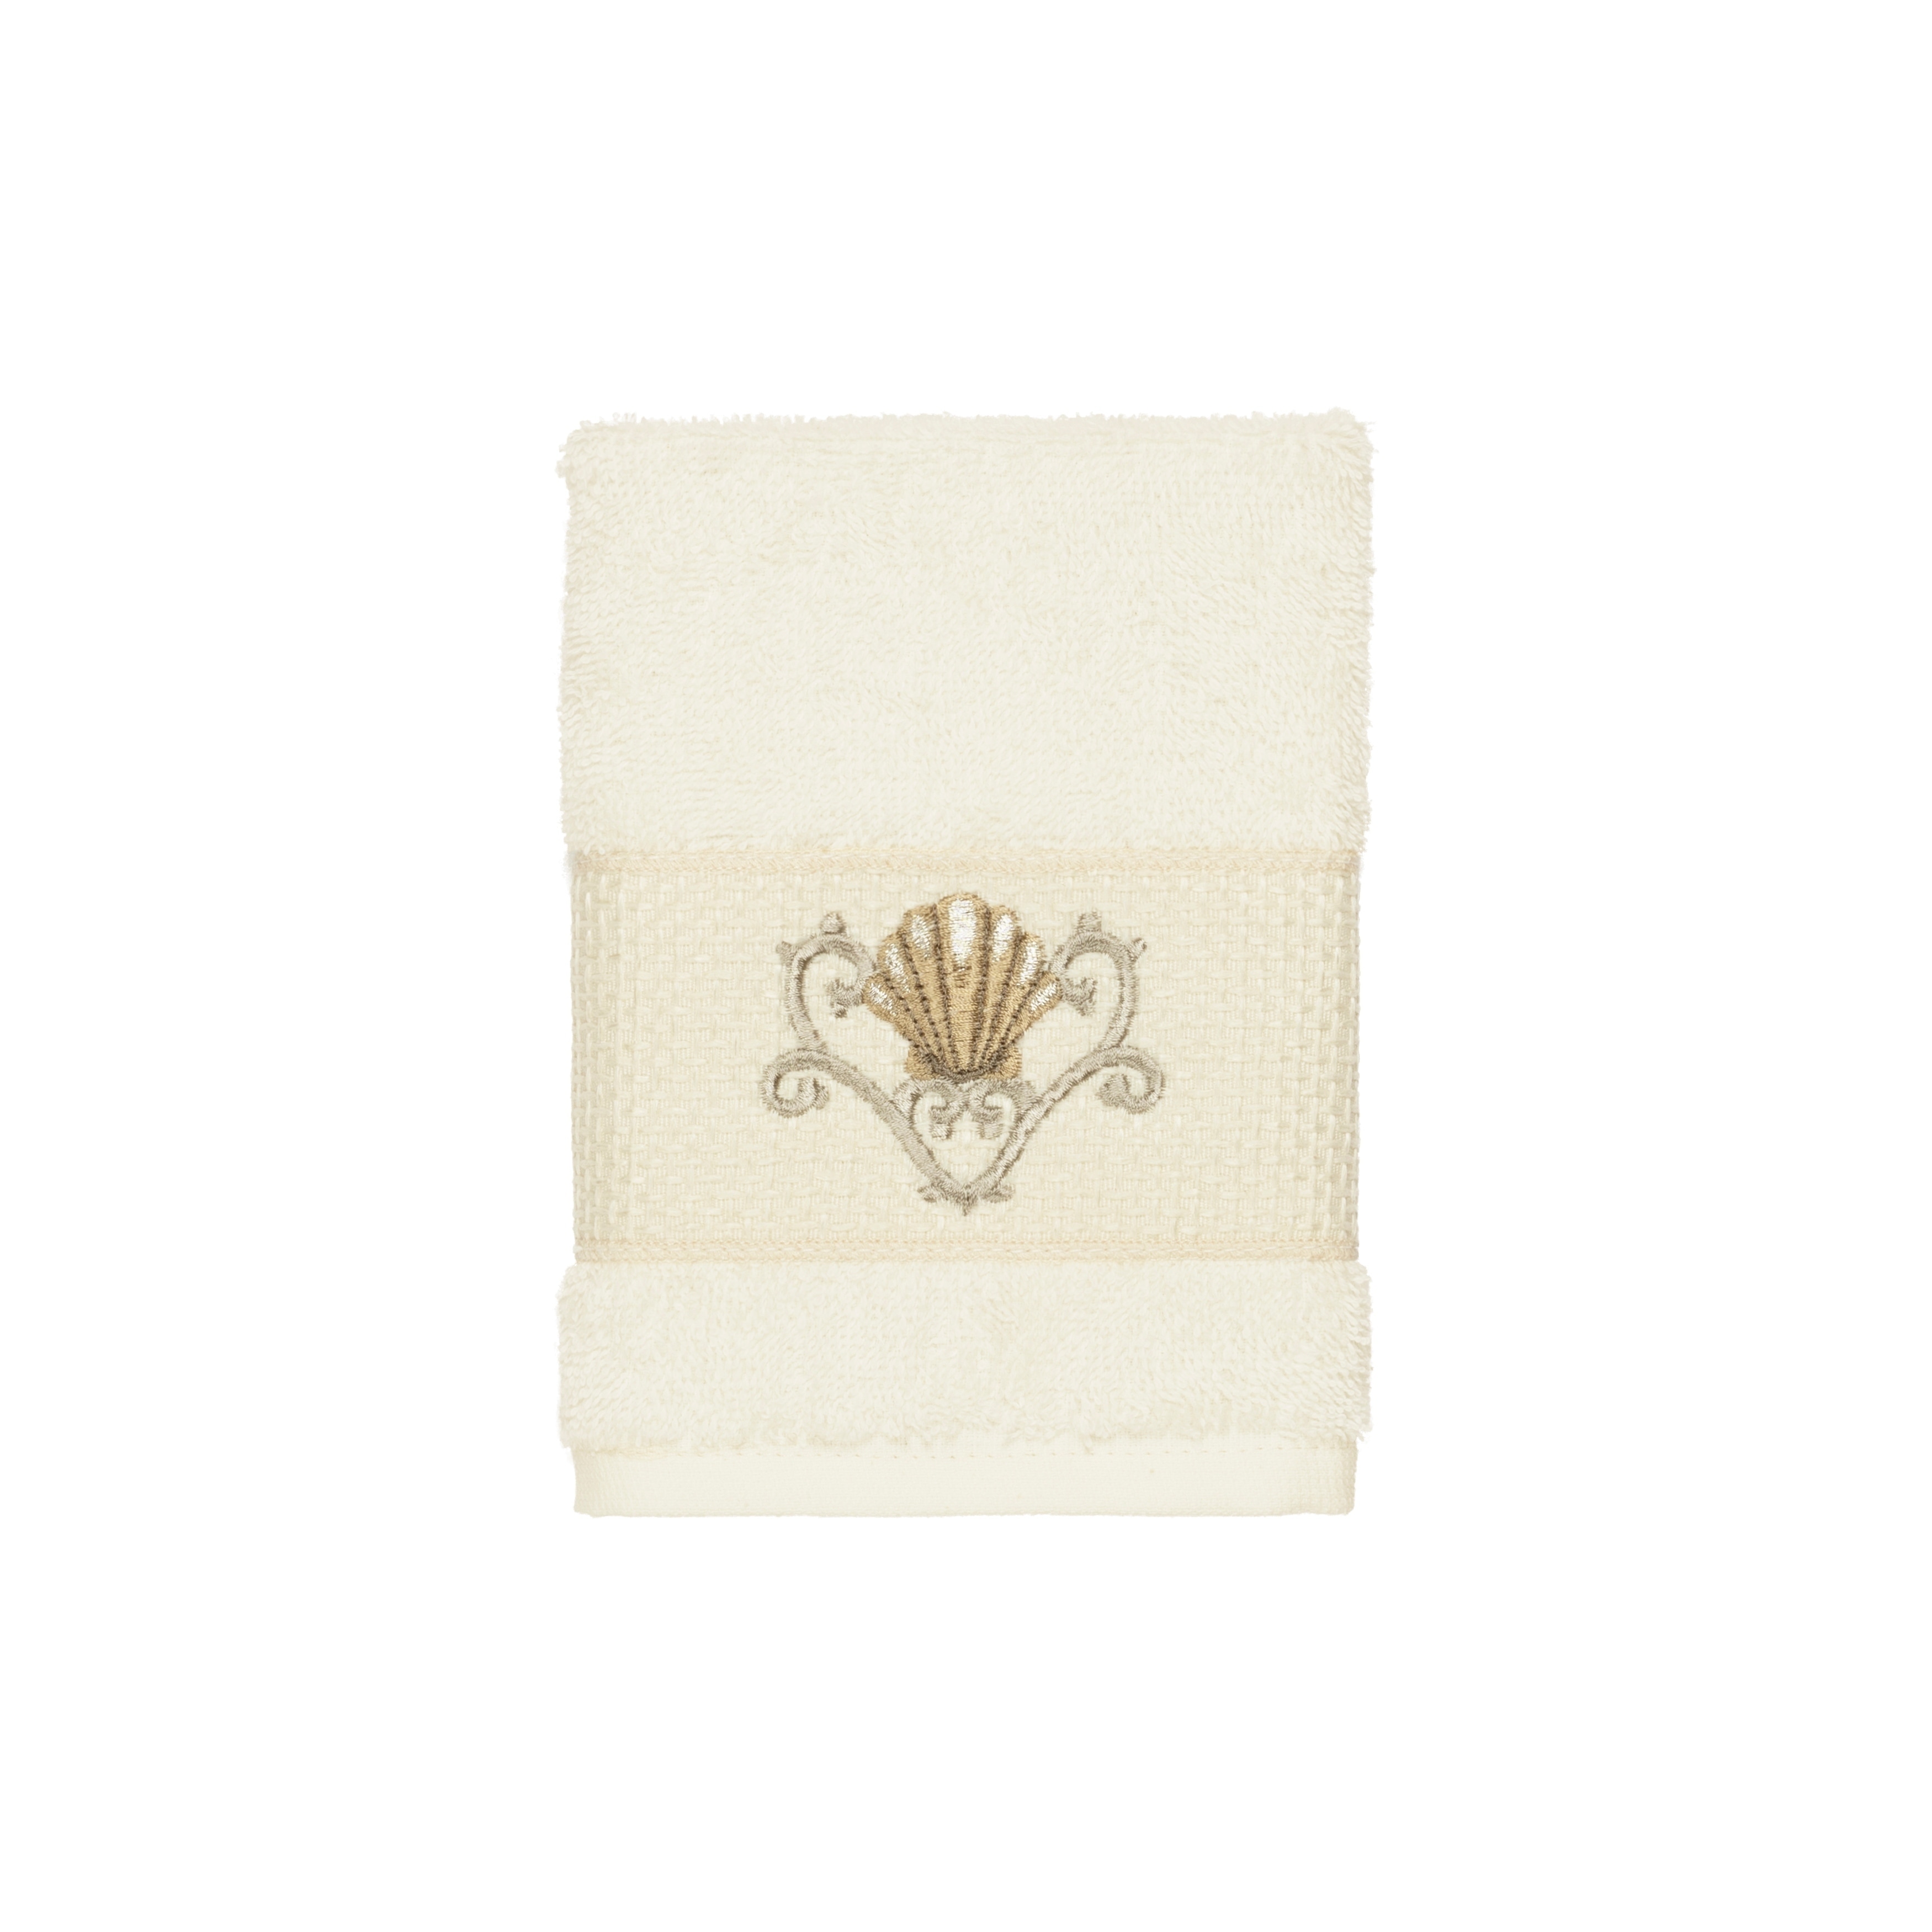 Ebru Hounds Tooth Embroidered Bath and Hand Towel Set Best Quality %100 Turkish Cotton (Ecru)